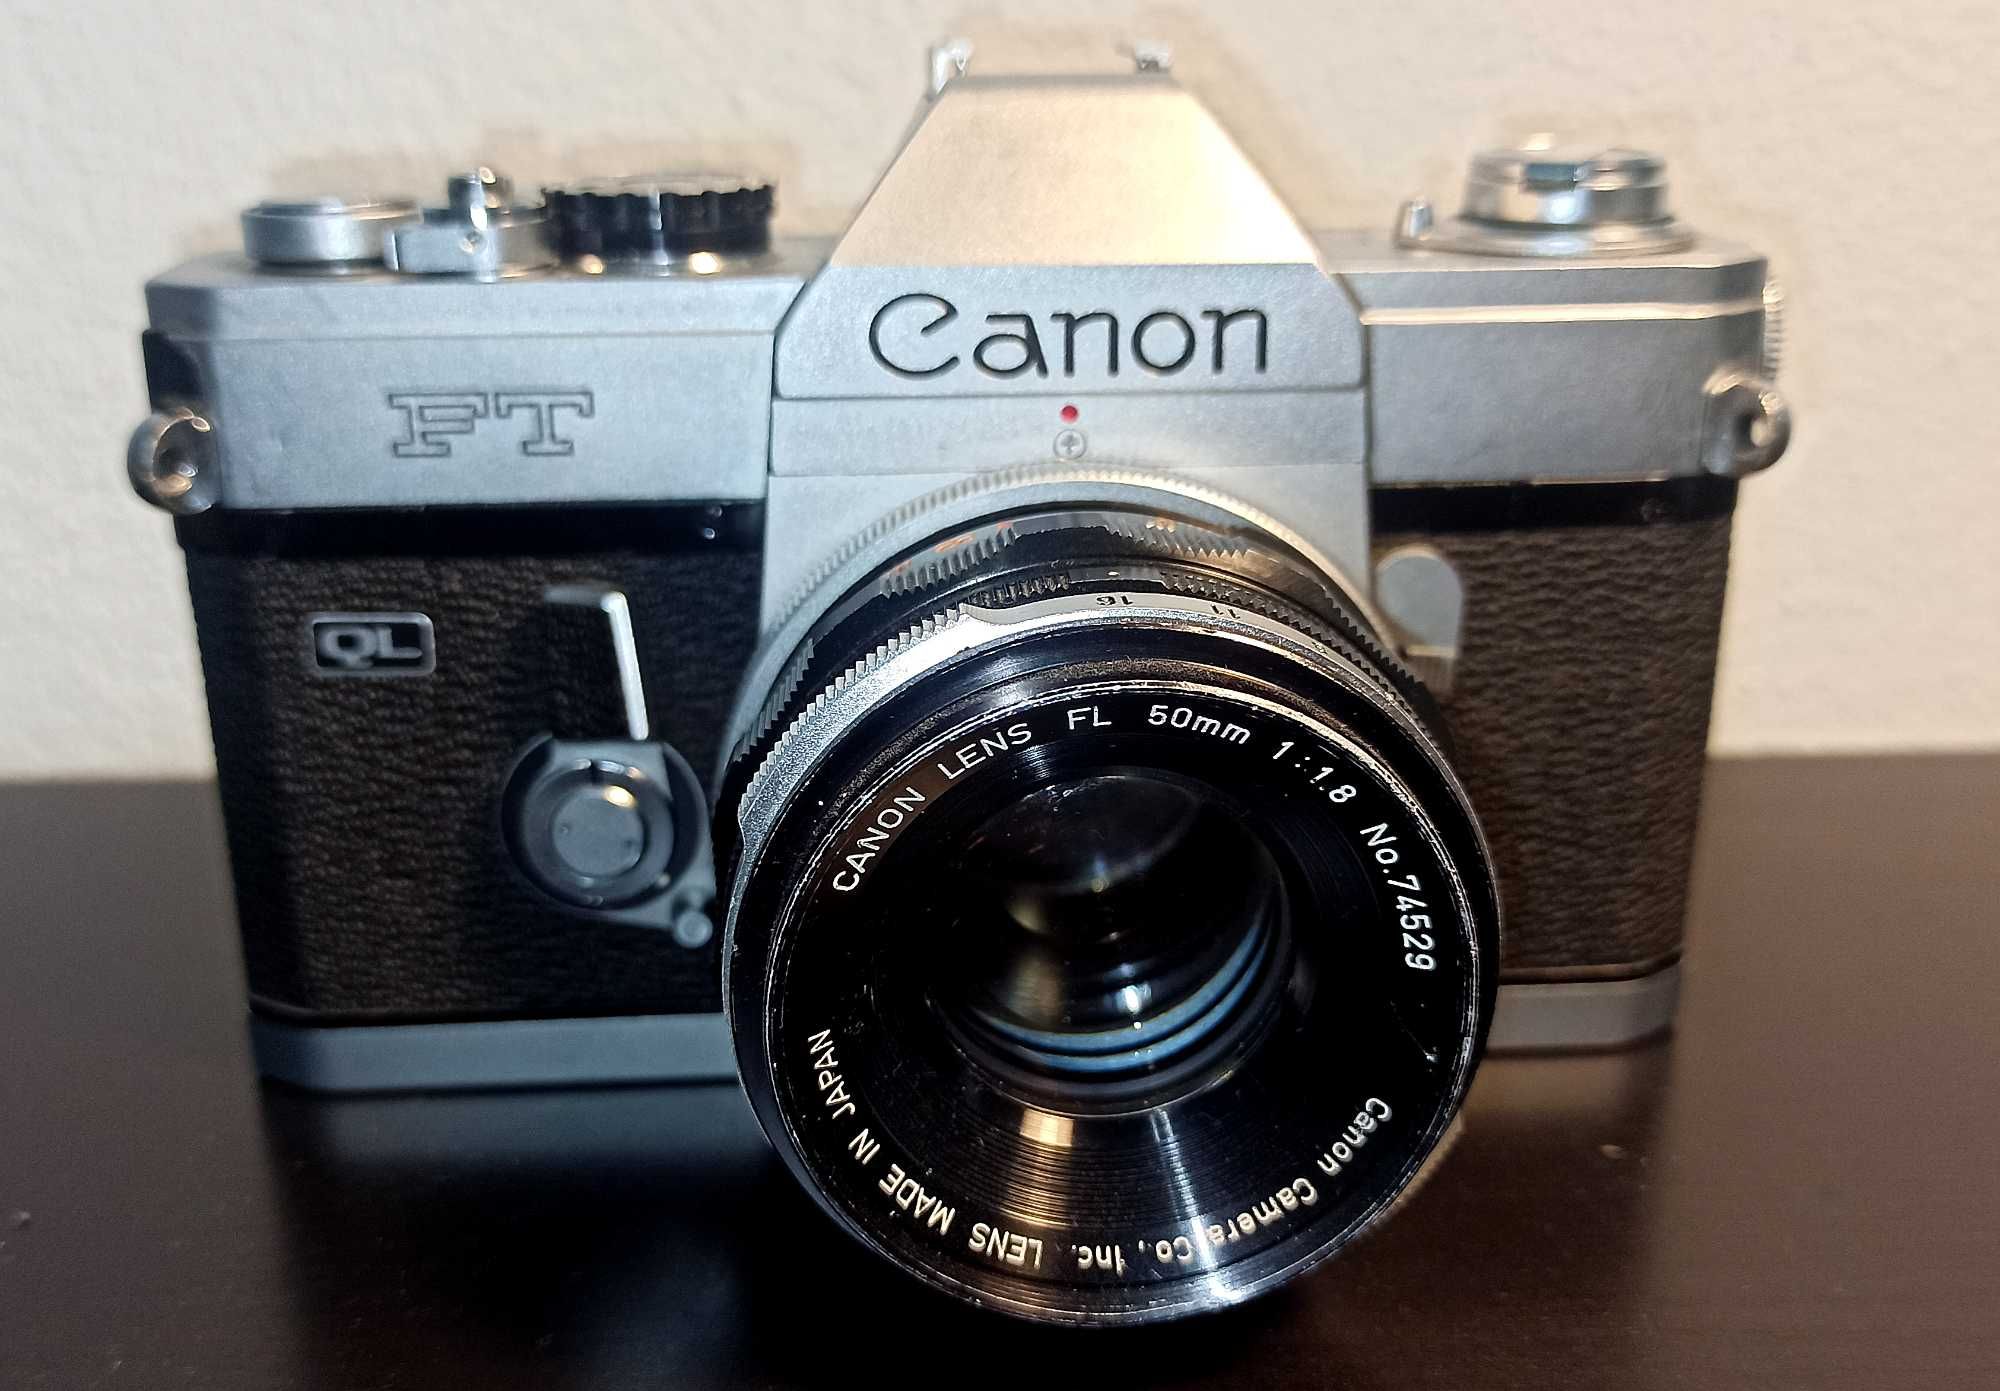 Canon FT QL plus Canon FL 50 mm 1:1.8, japoński analog, lata 60-te